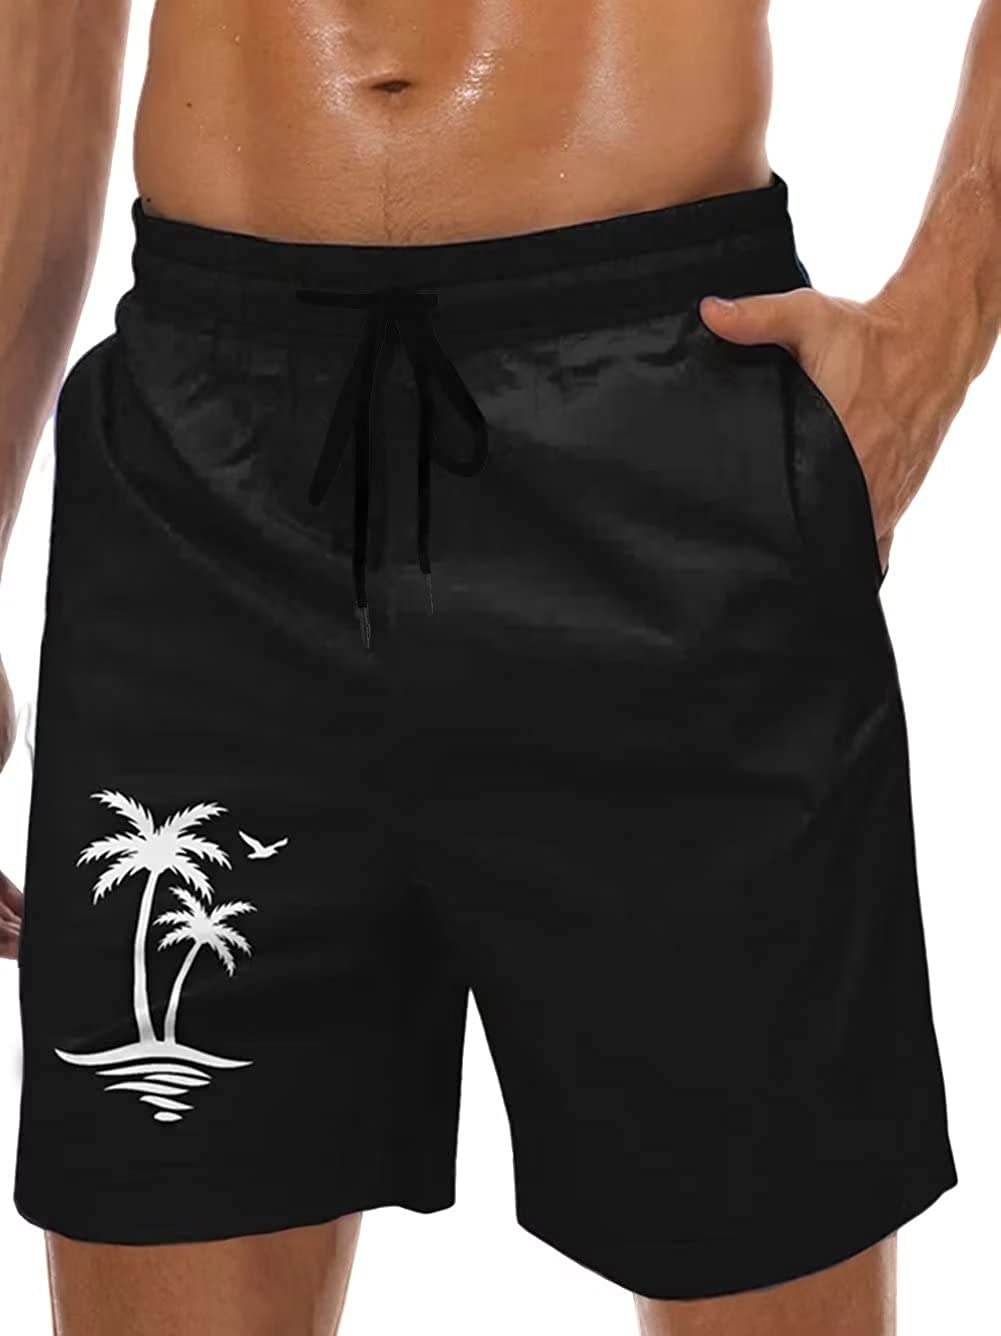 Lzzidou Men's Swim Trunks 9 inch Inseam Bathing Suit Hawaiian Swimsuits Mesh Lining Beach Shorts with Pockets